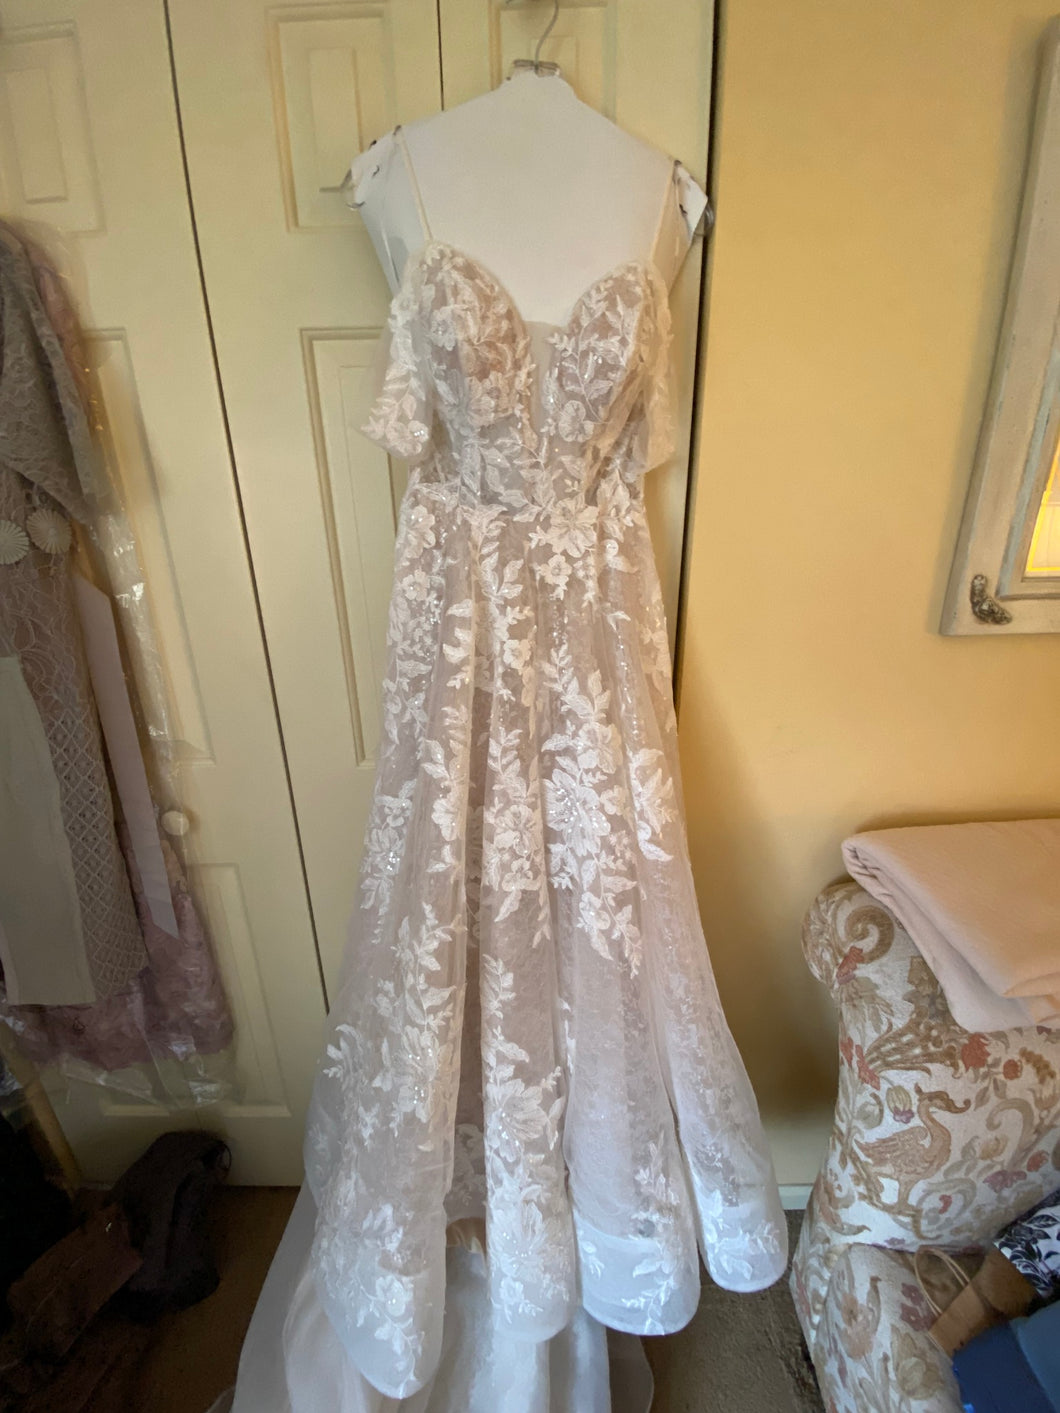 Martina Liana '1086' wedding dress size-06 NEW